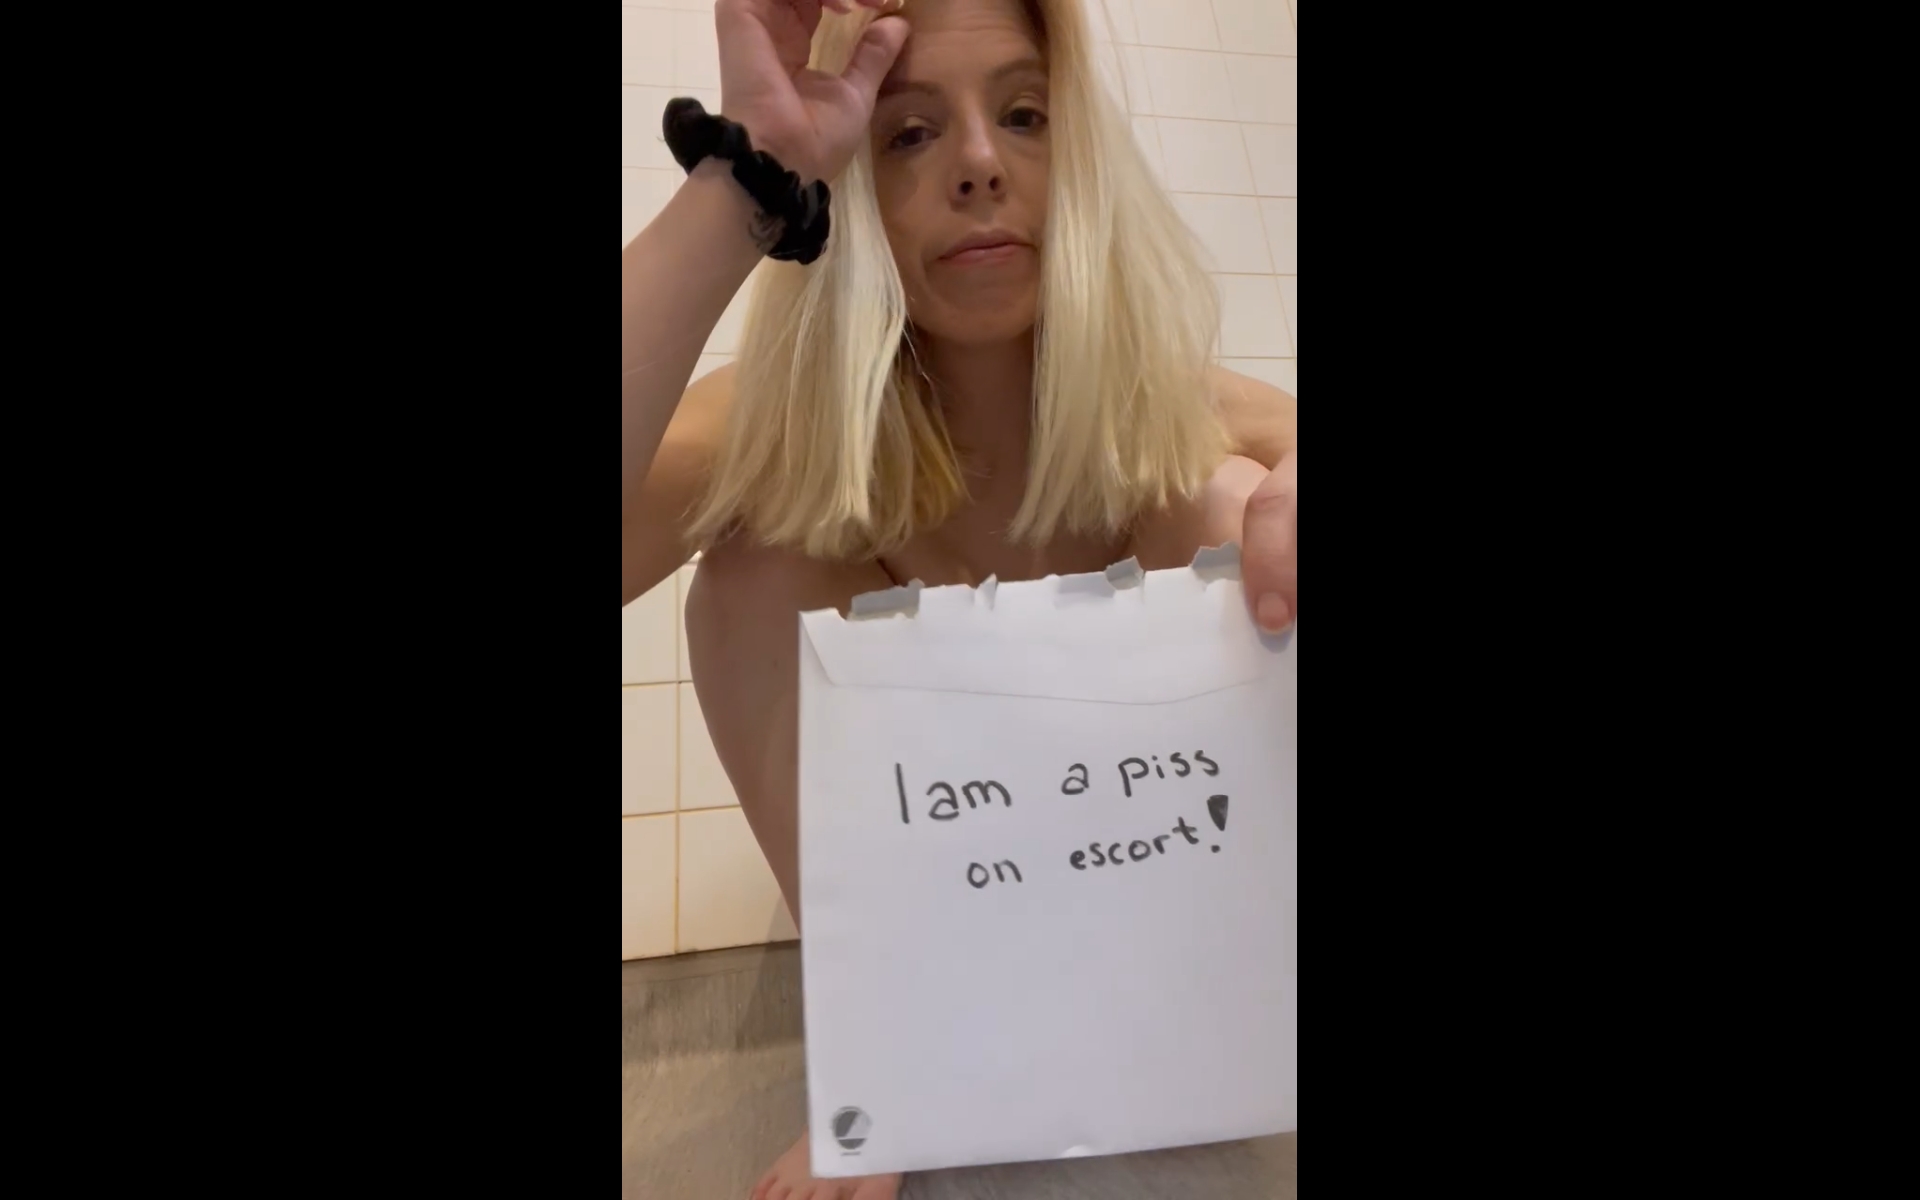 I am a swedish piss on escort - video 2